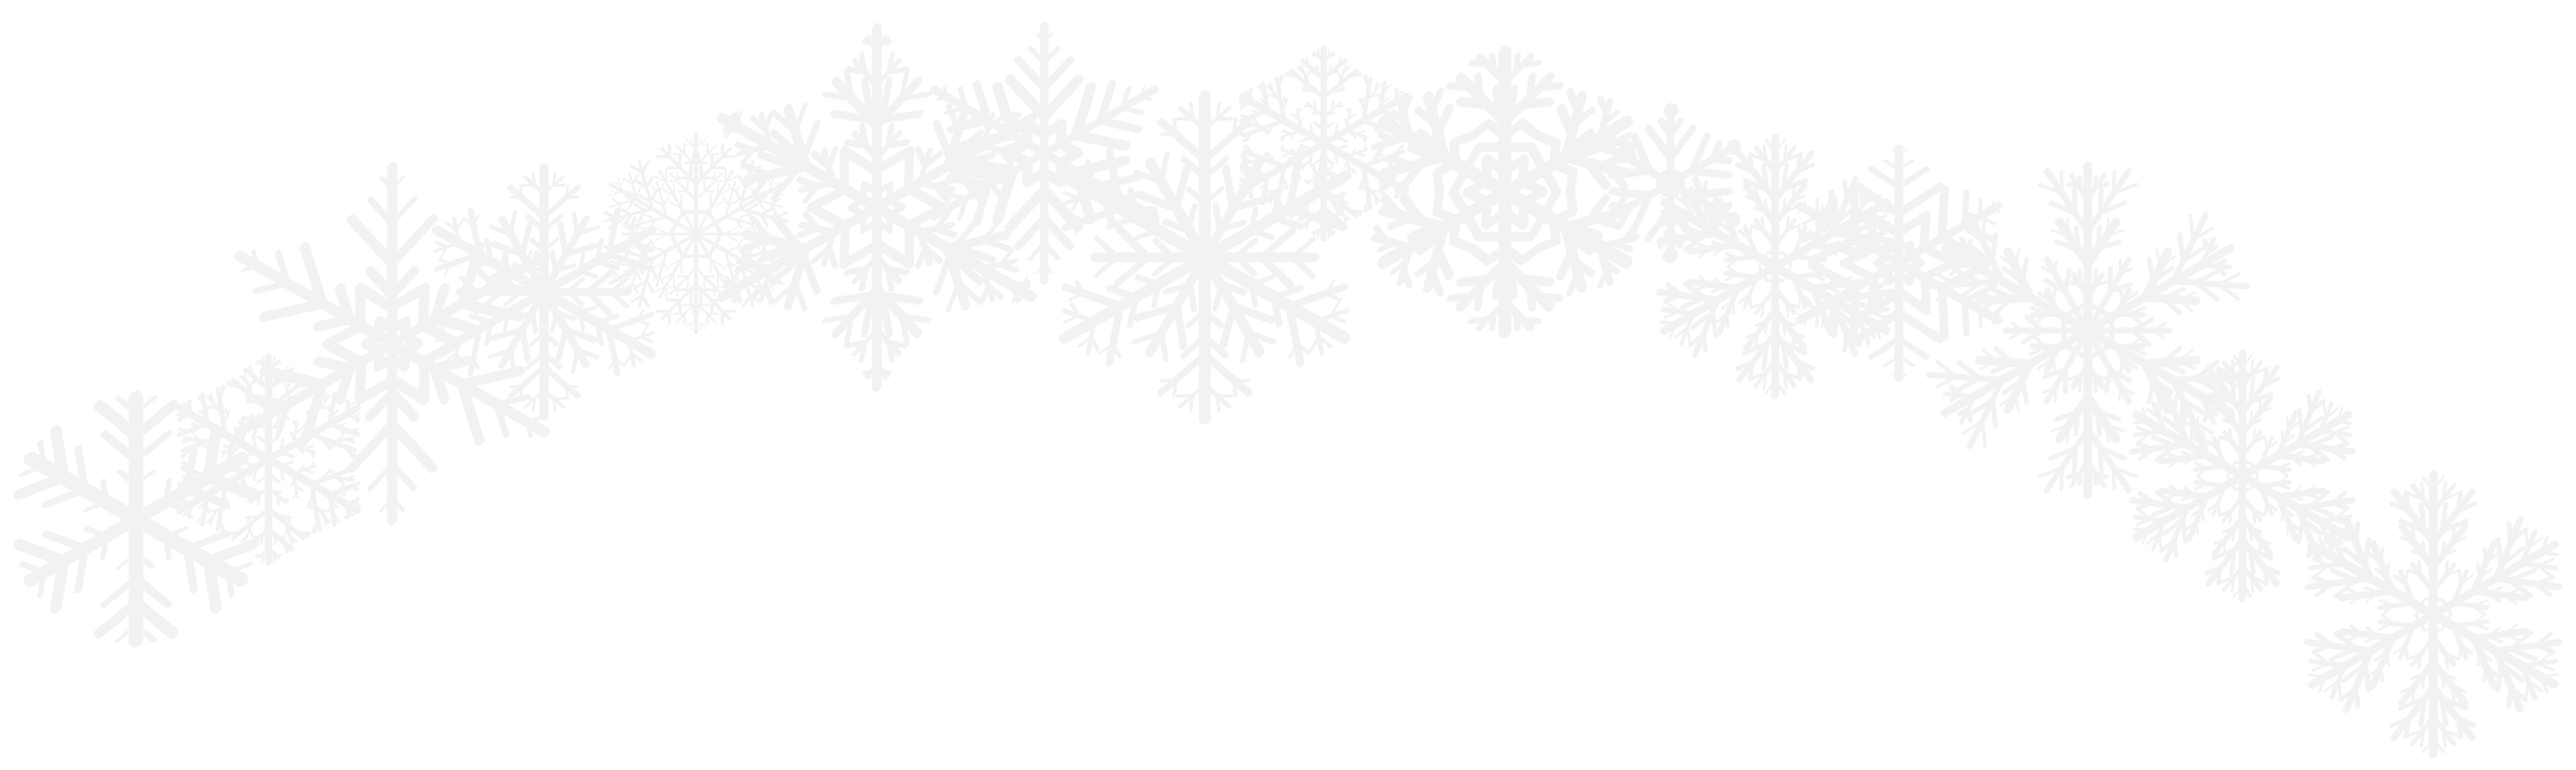 clipart snowflake embellishment